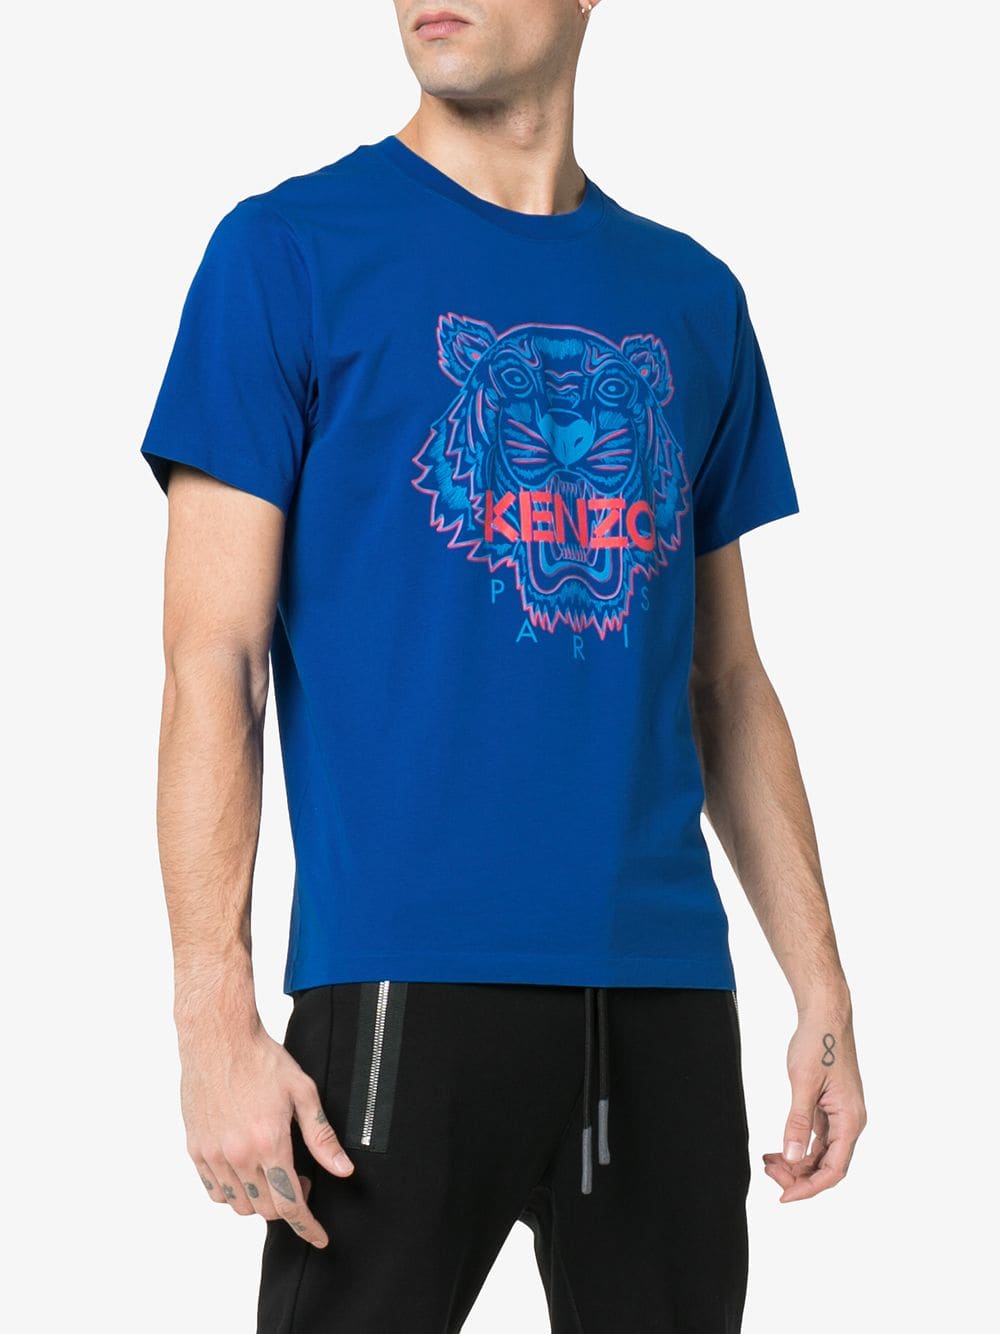 Kenzo Two-tone Tiger T-shirt (Blue) - Bonjor Outlet